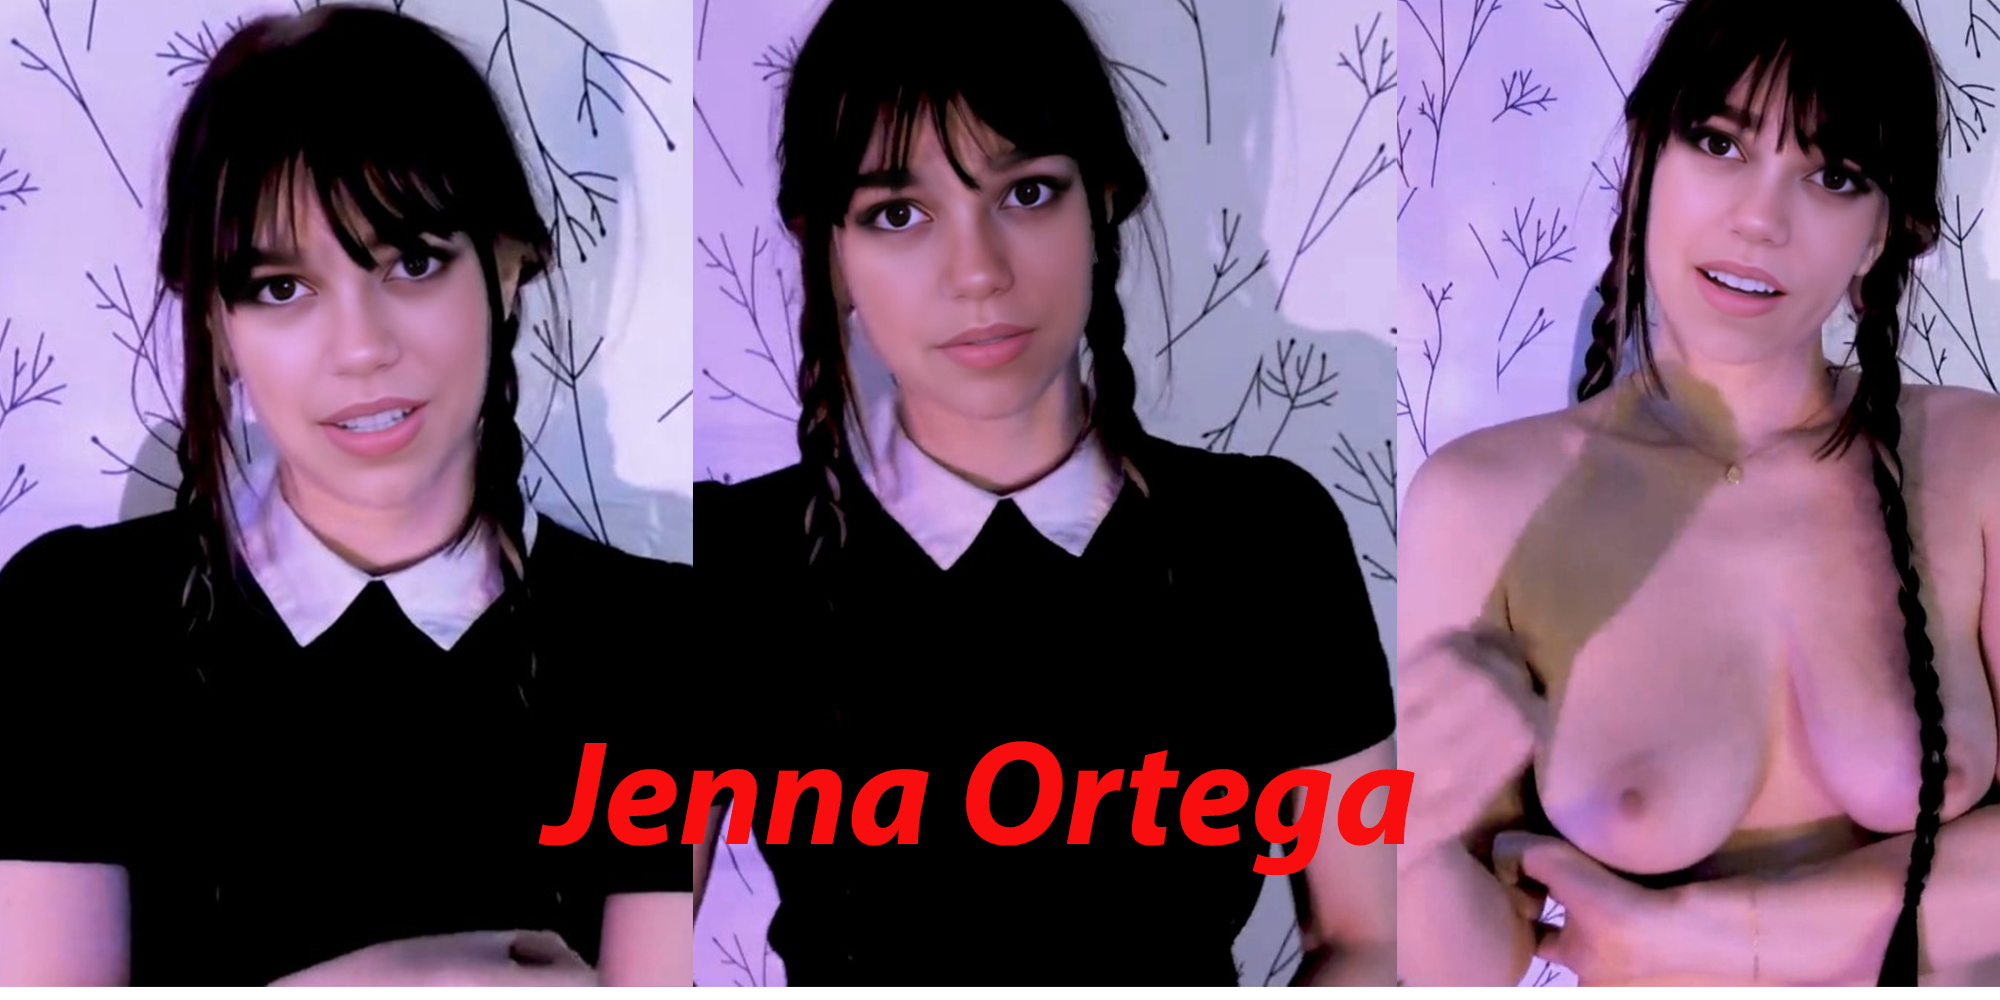 Jenna Ortega (Wednesday cosplay) tells you what to do